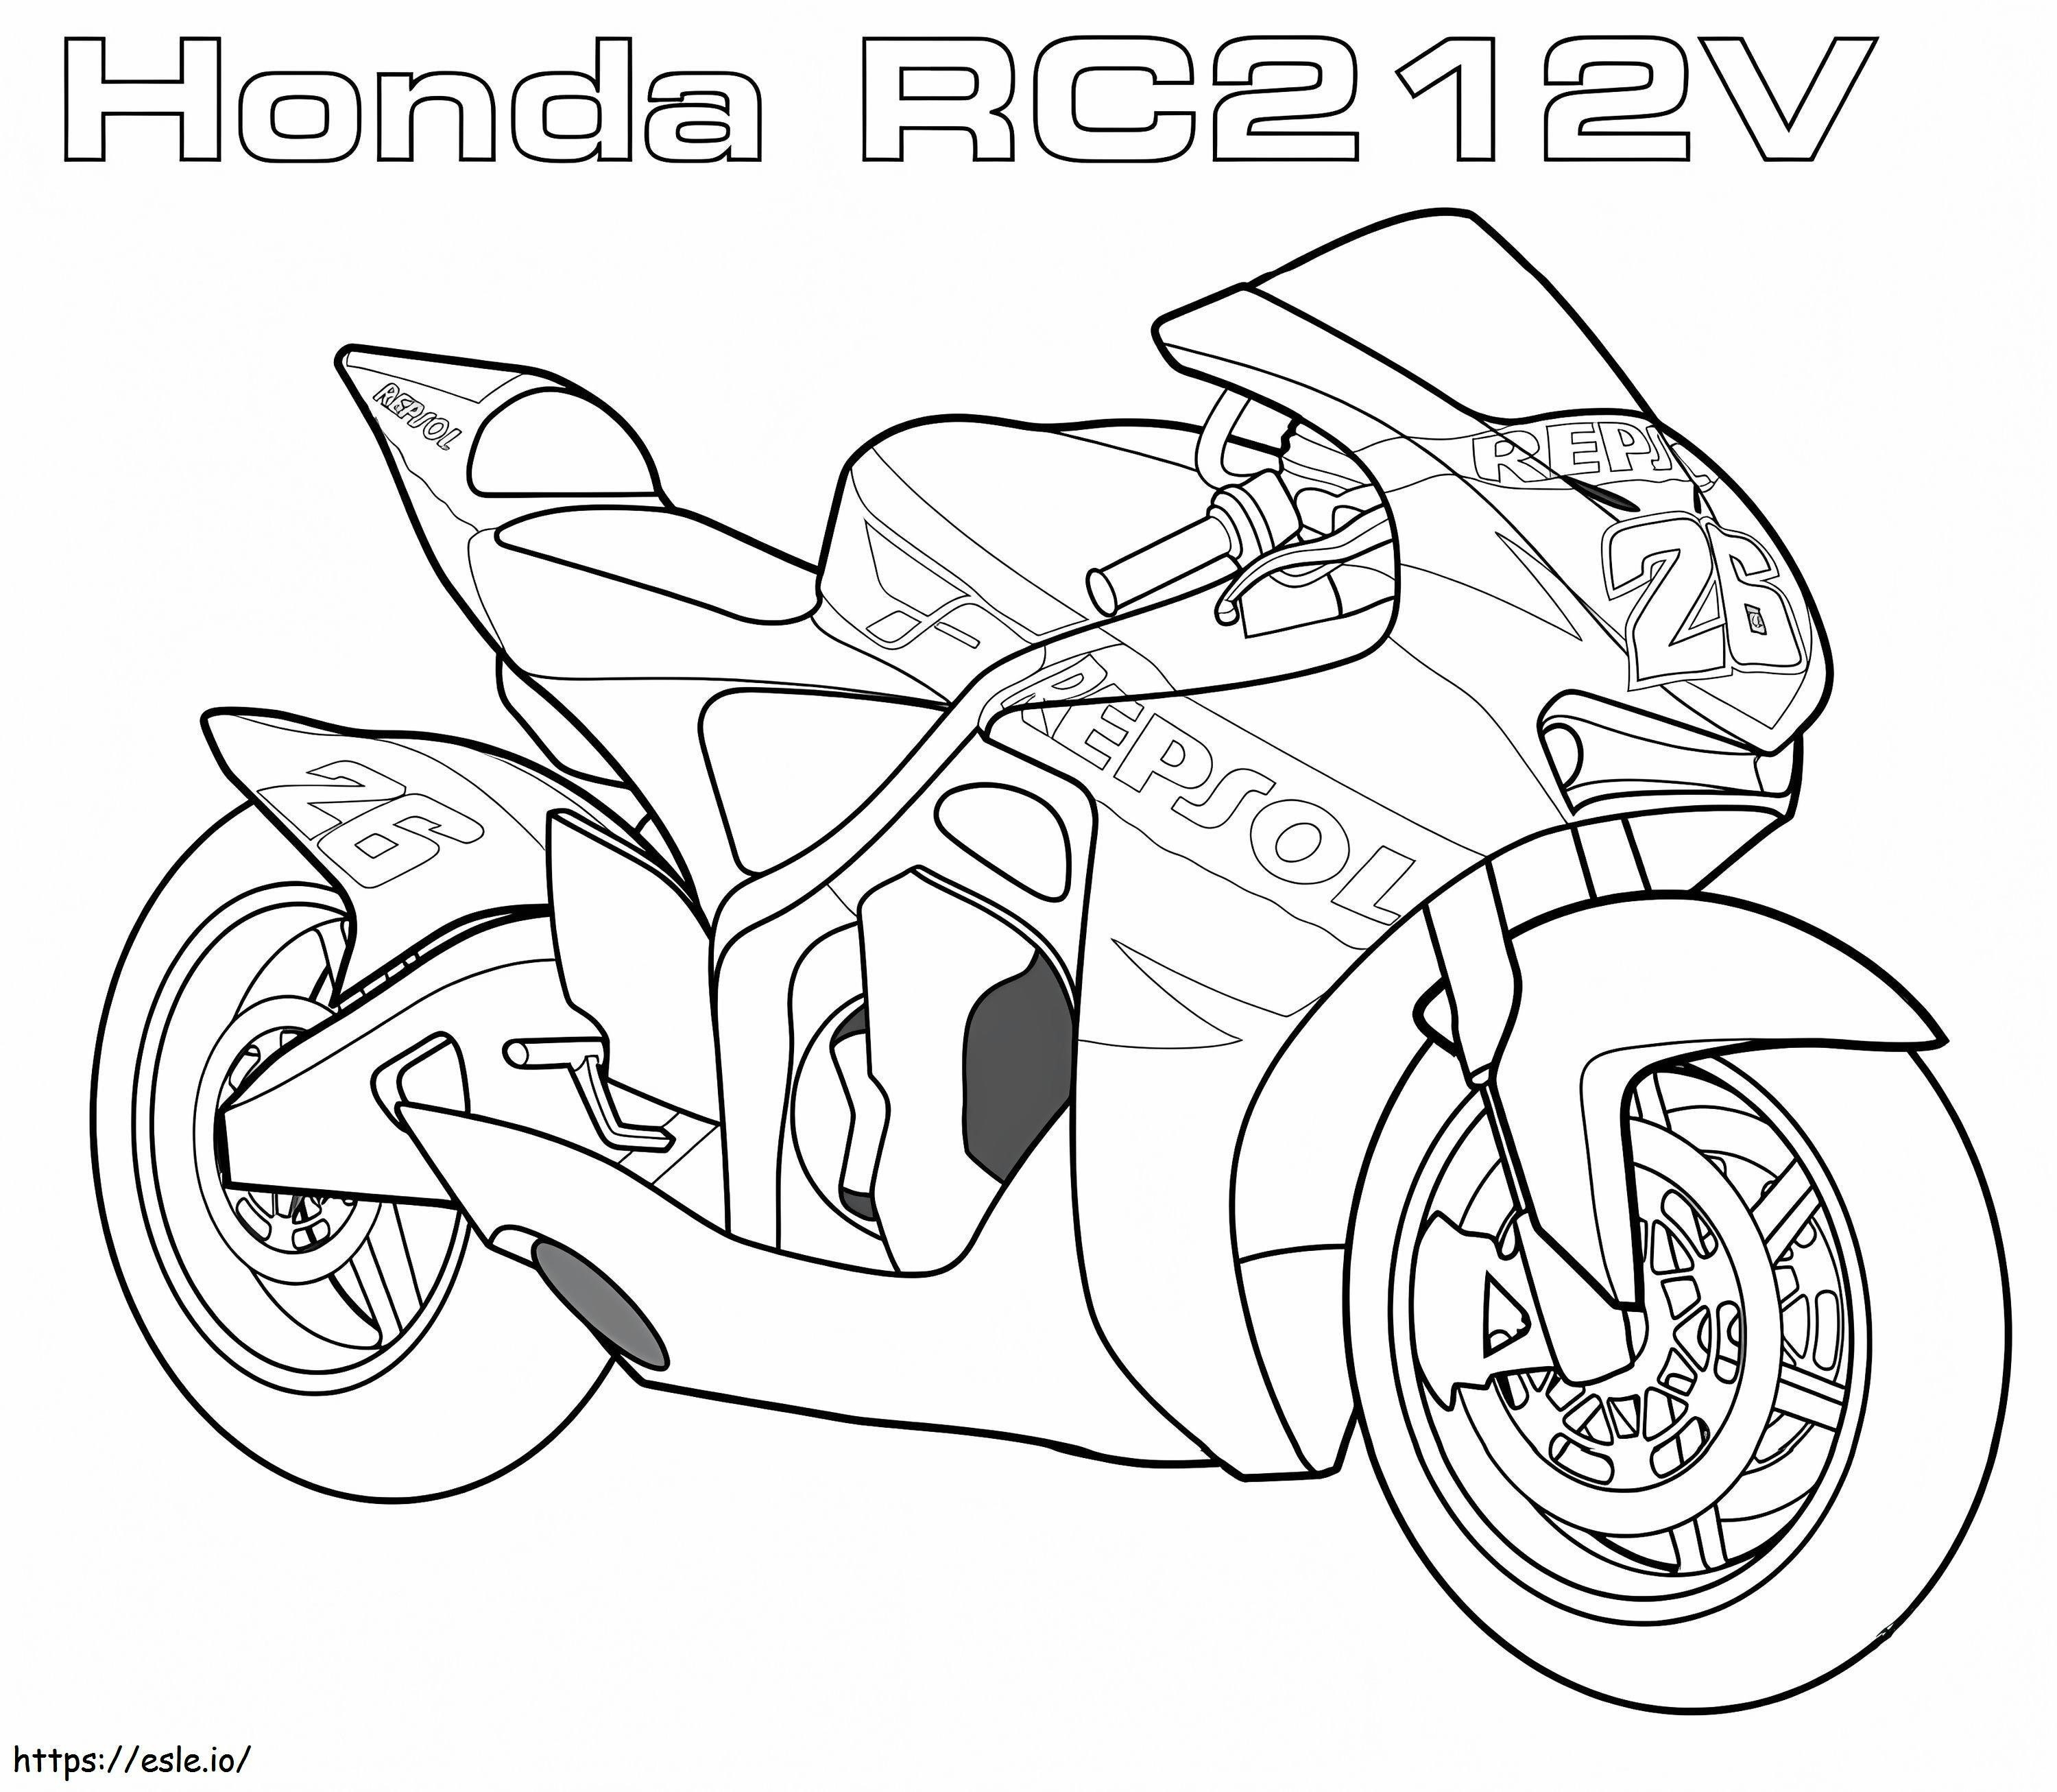 Honda RC2 12V da colorare